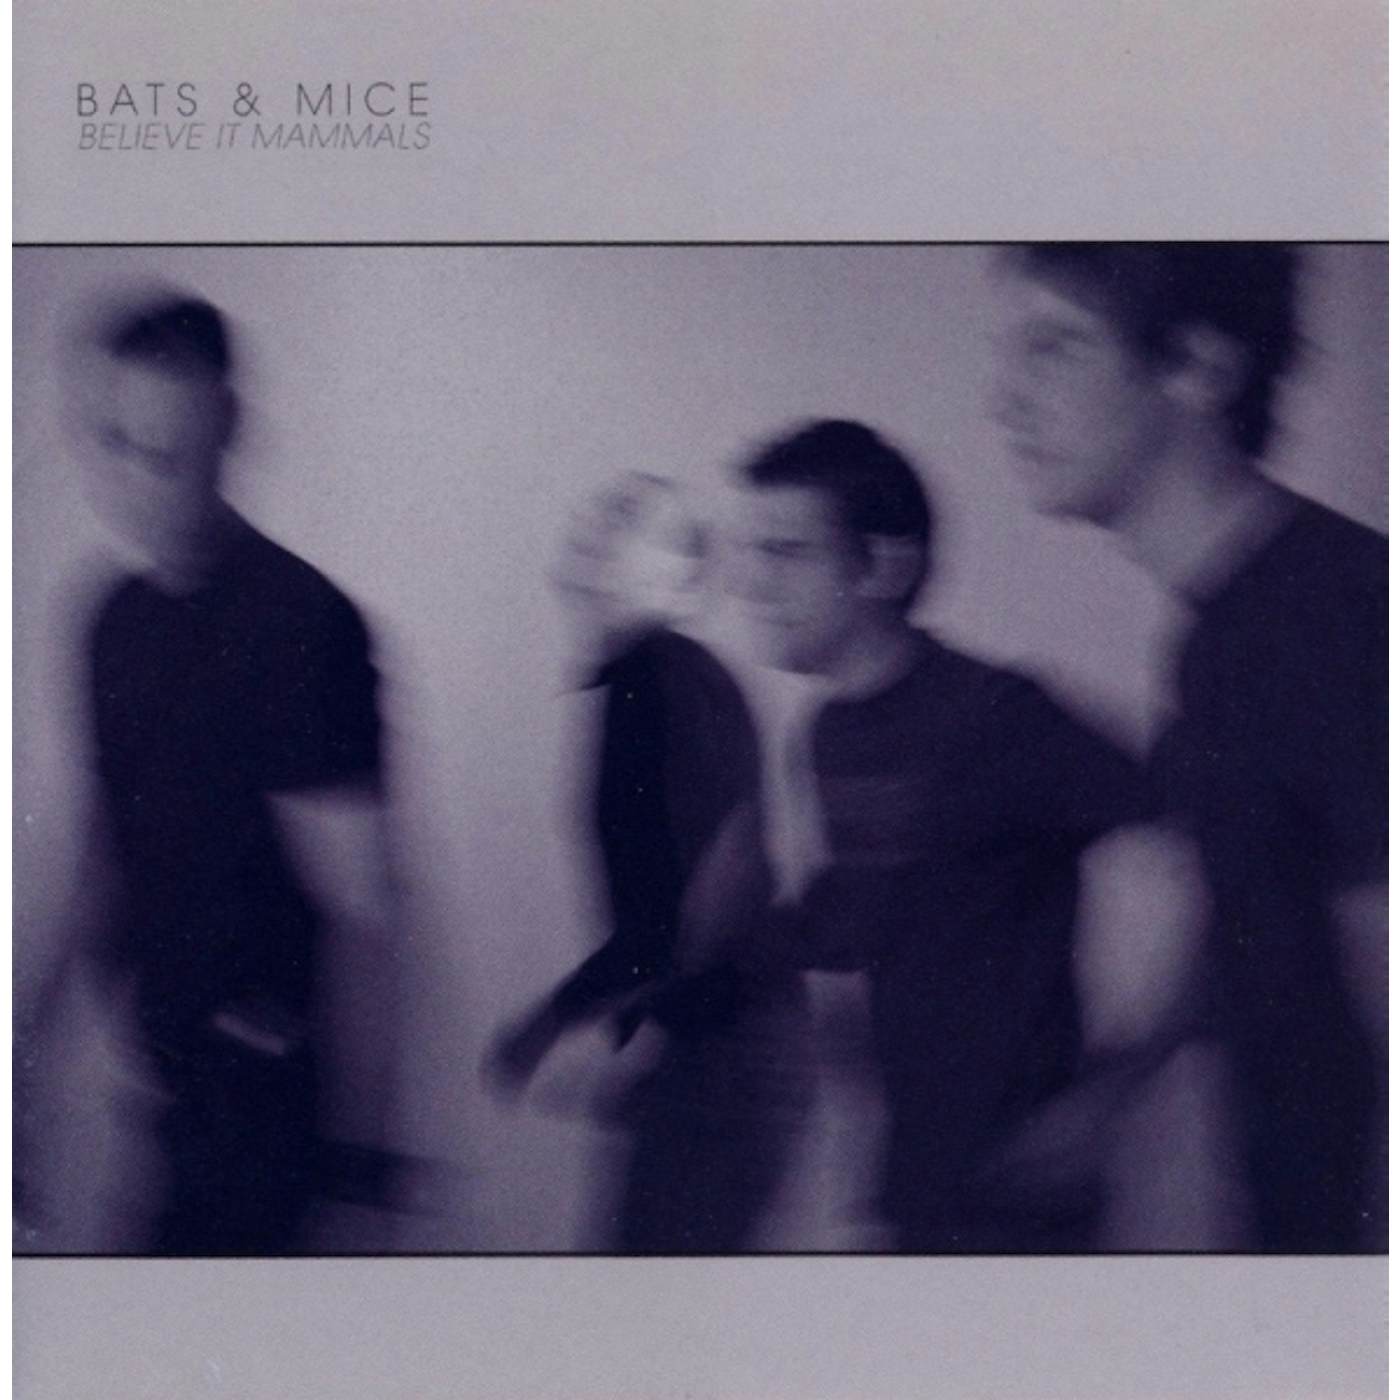 Bats & Mice BELIEVE IT MAMMALS Vinyl Record